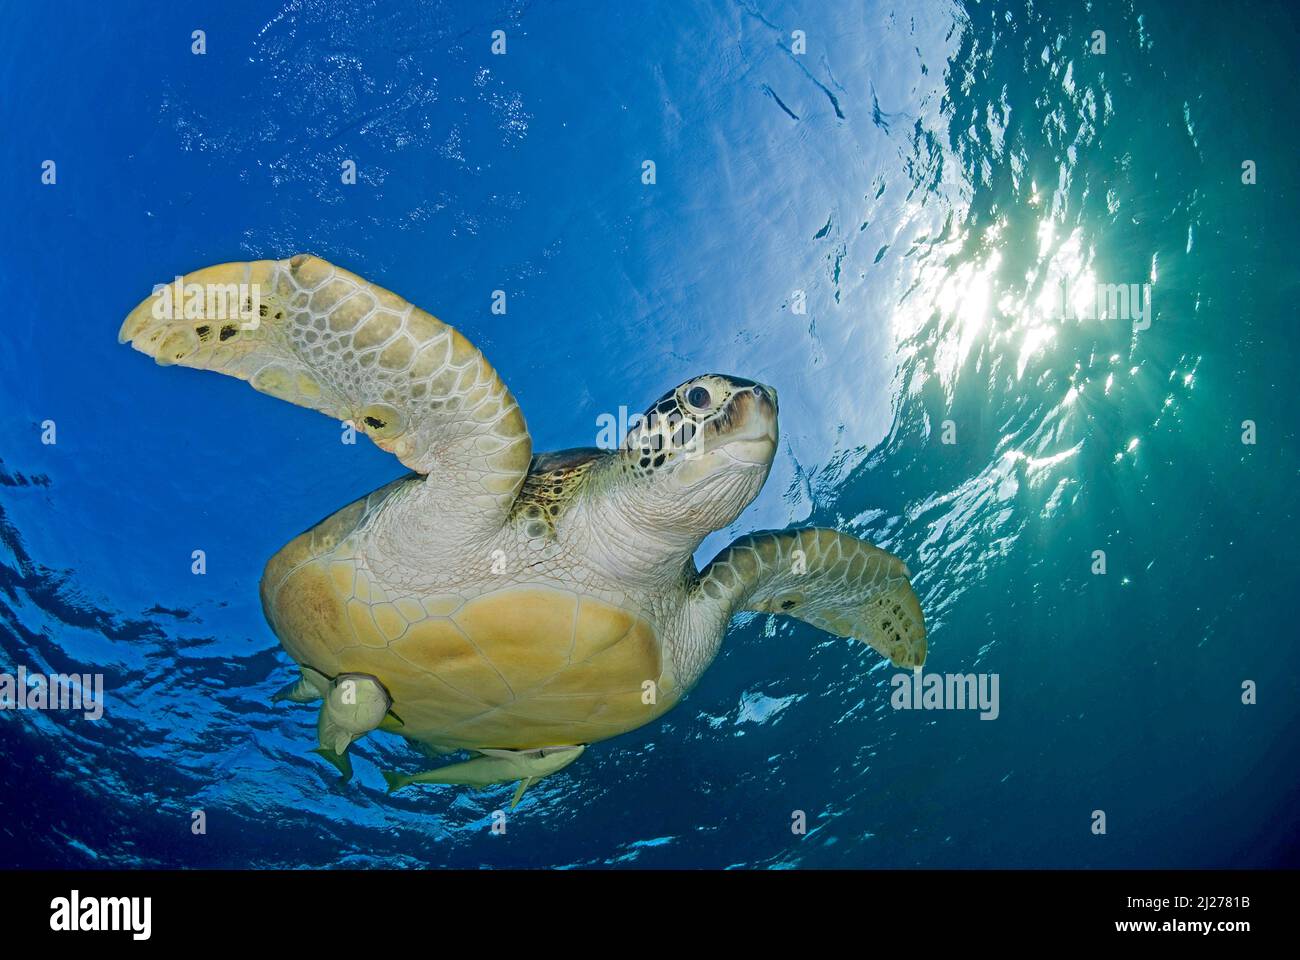 Green Sea Turtle (Chelonia mydas) with remoras (Echeneis naucrates), swimming in blue water, Marsa Alam, Egypt Stock Photo